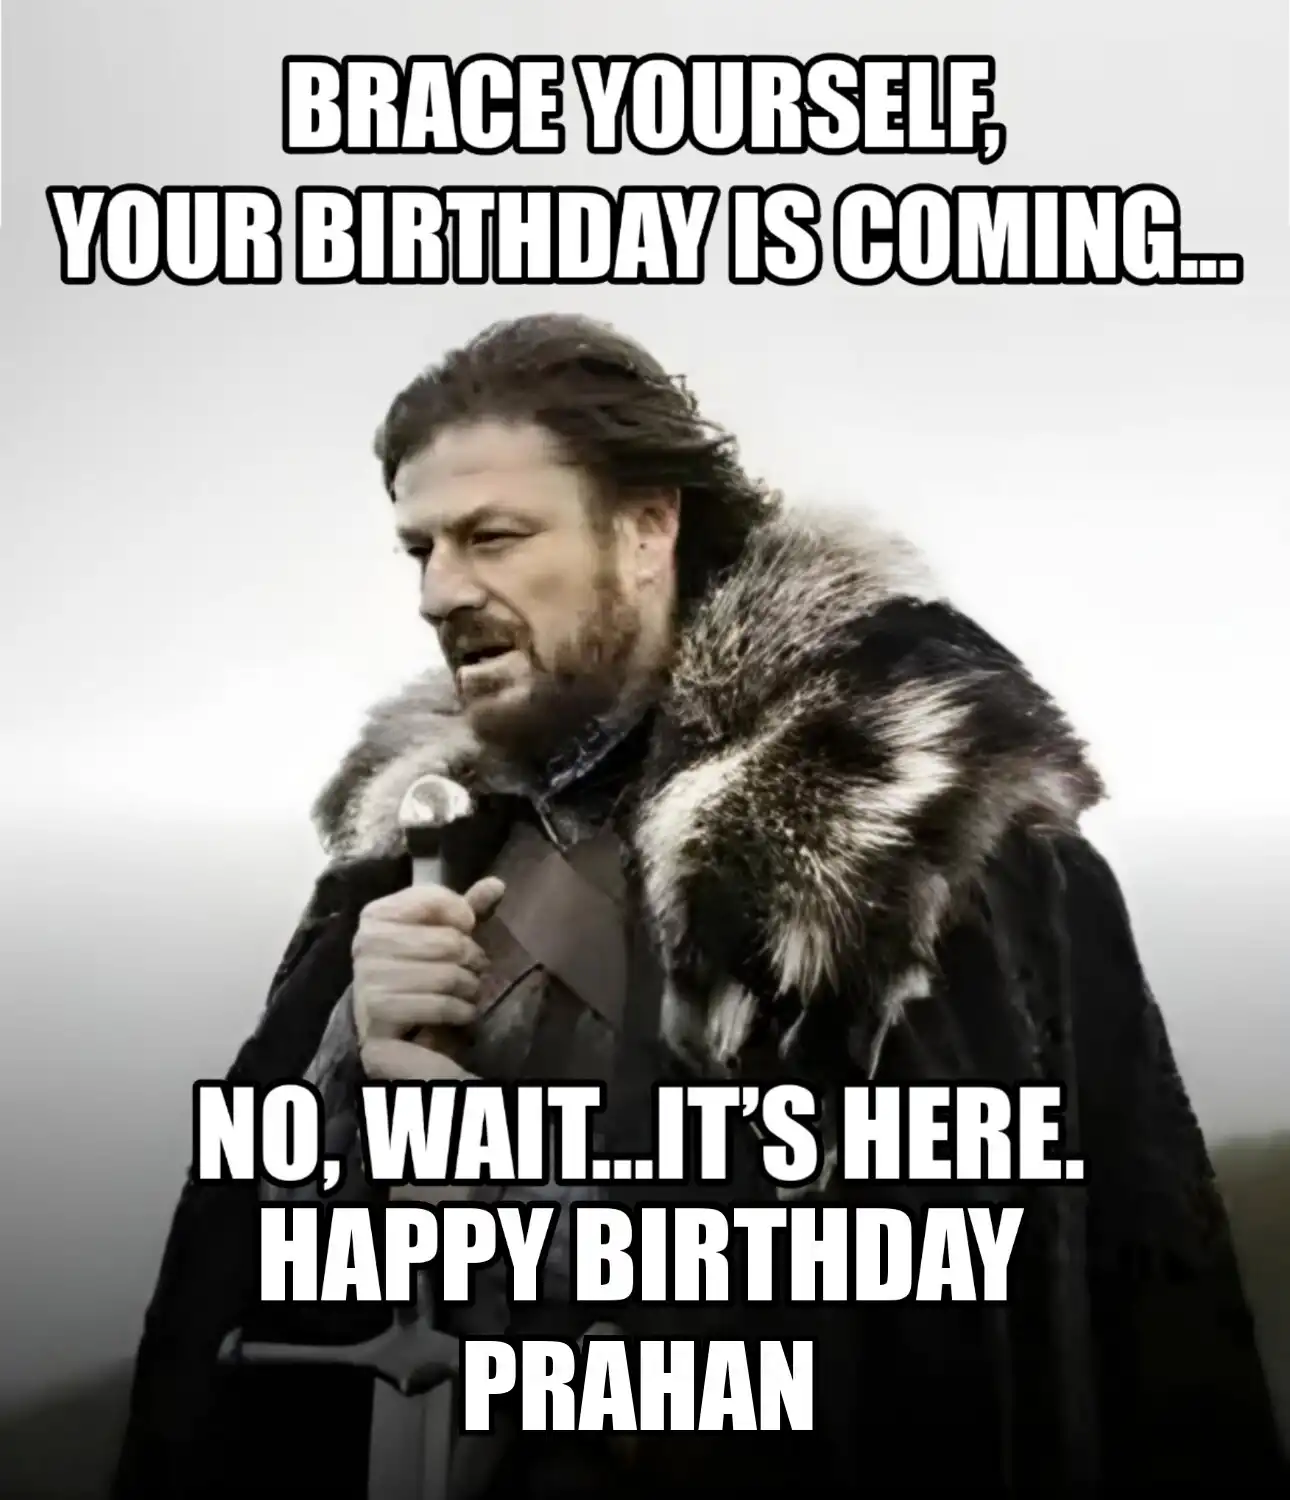 Happy Birthday Prahan Brace Yourself Your Birthday Is Coming Meme